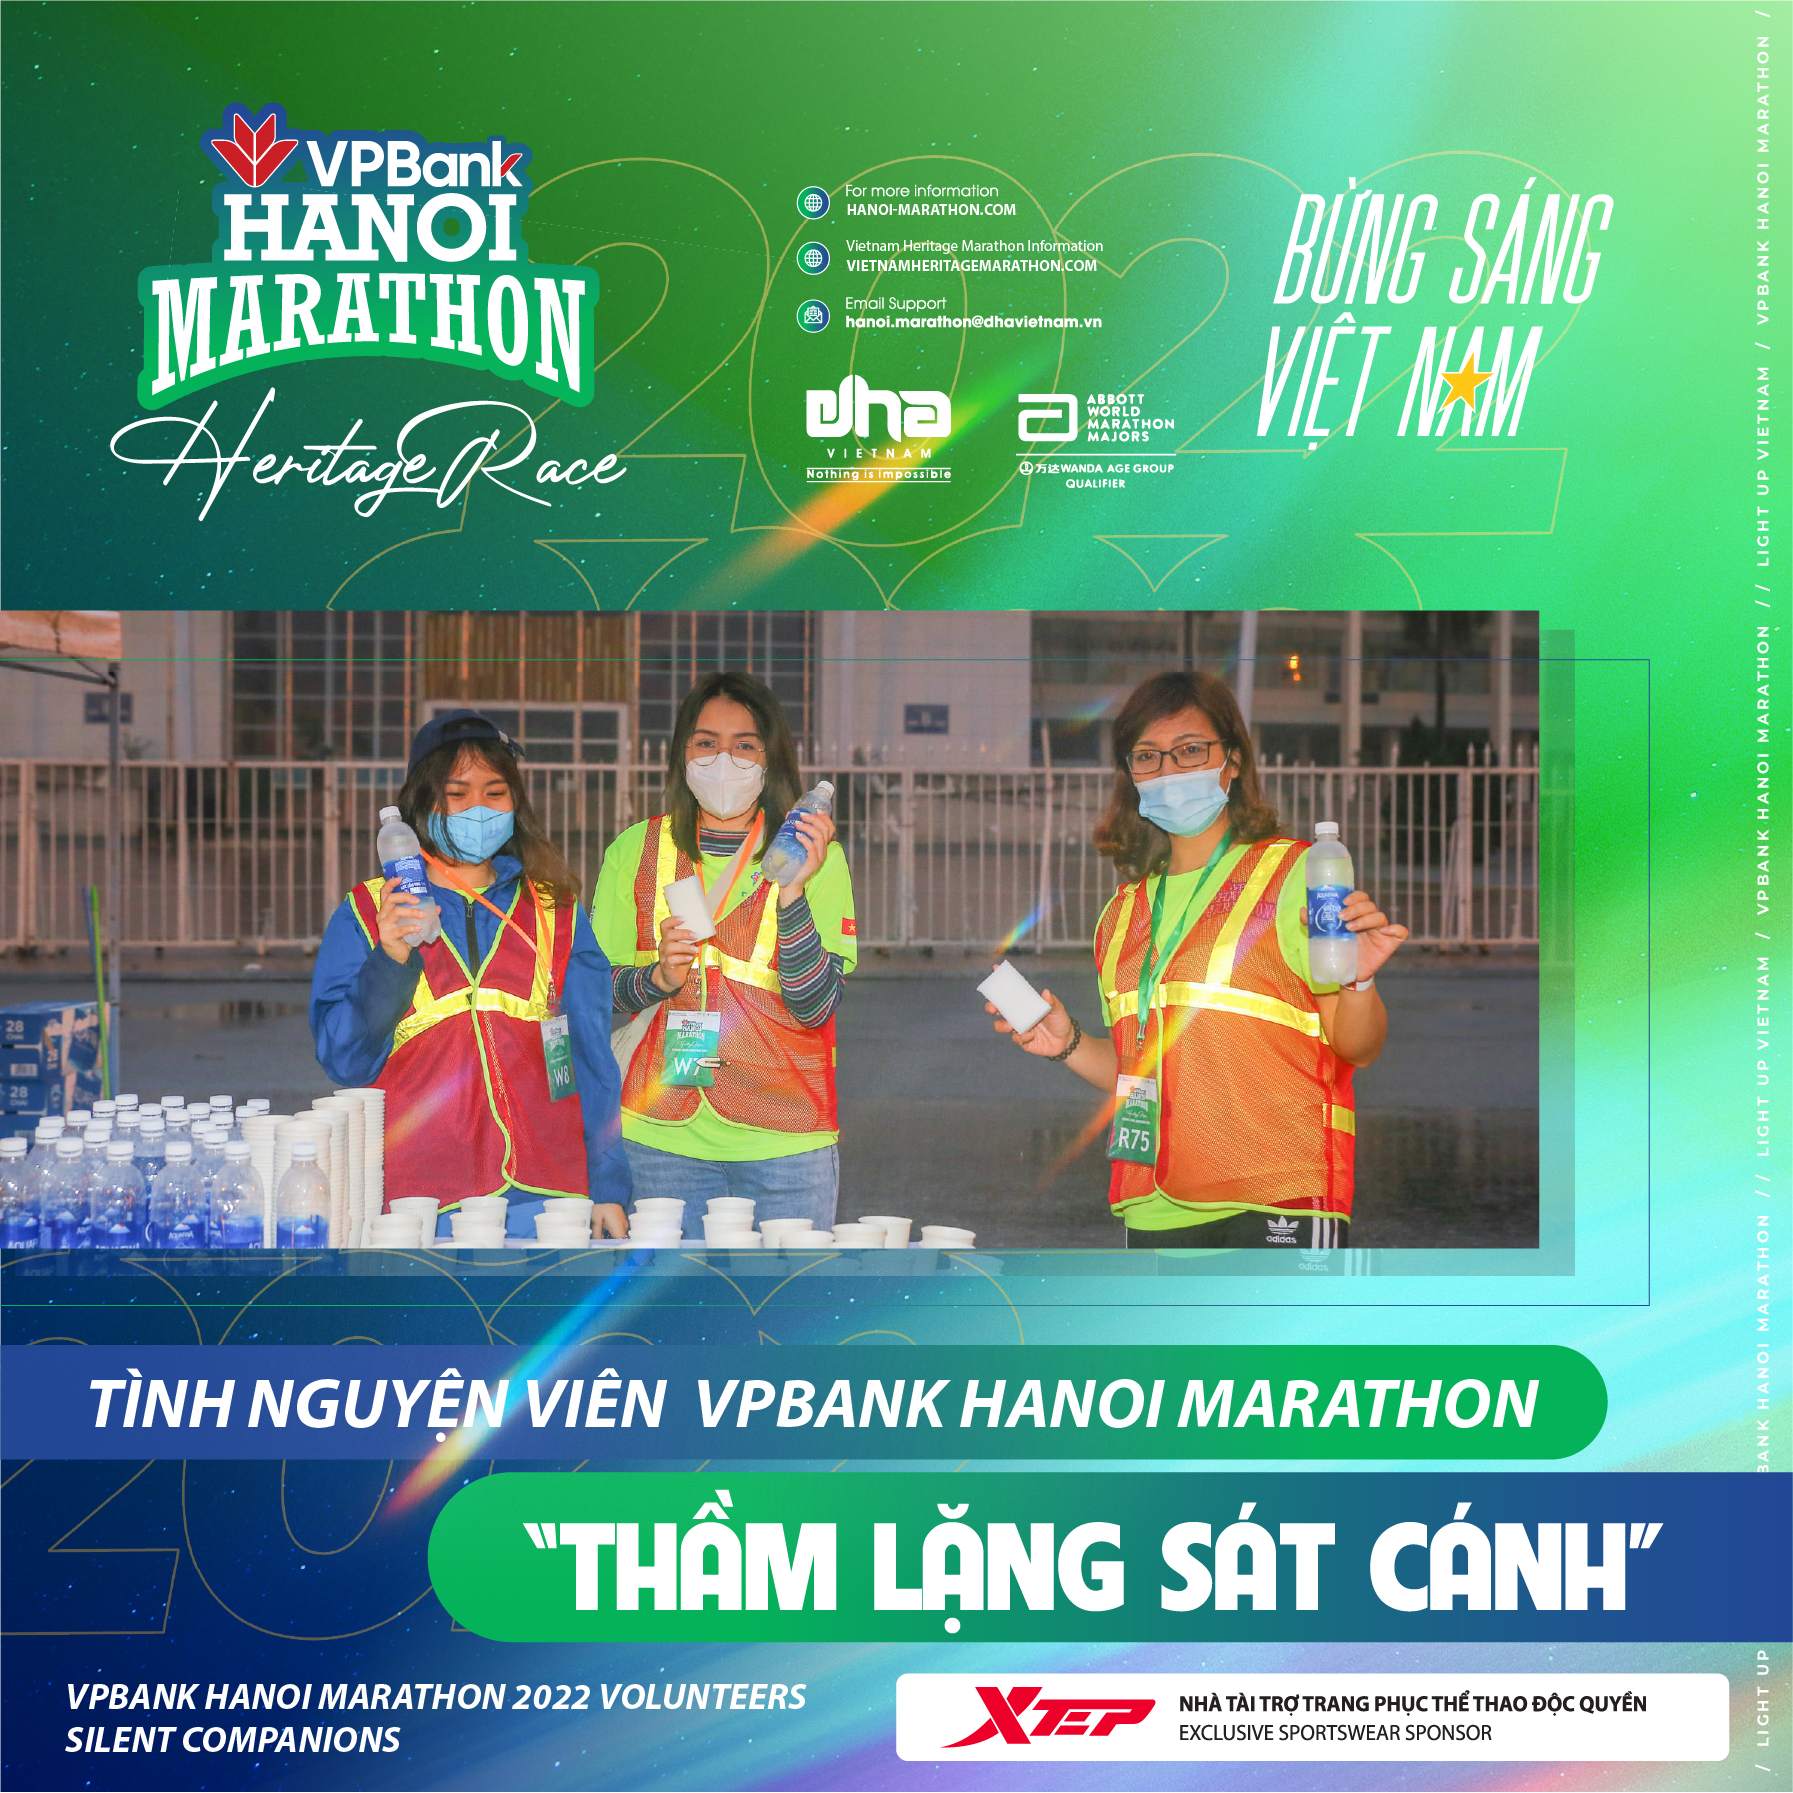 VPBank Hanoi Marathon 2022 Volunteers - Silent Companions